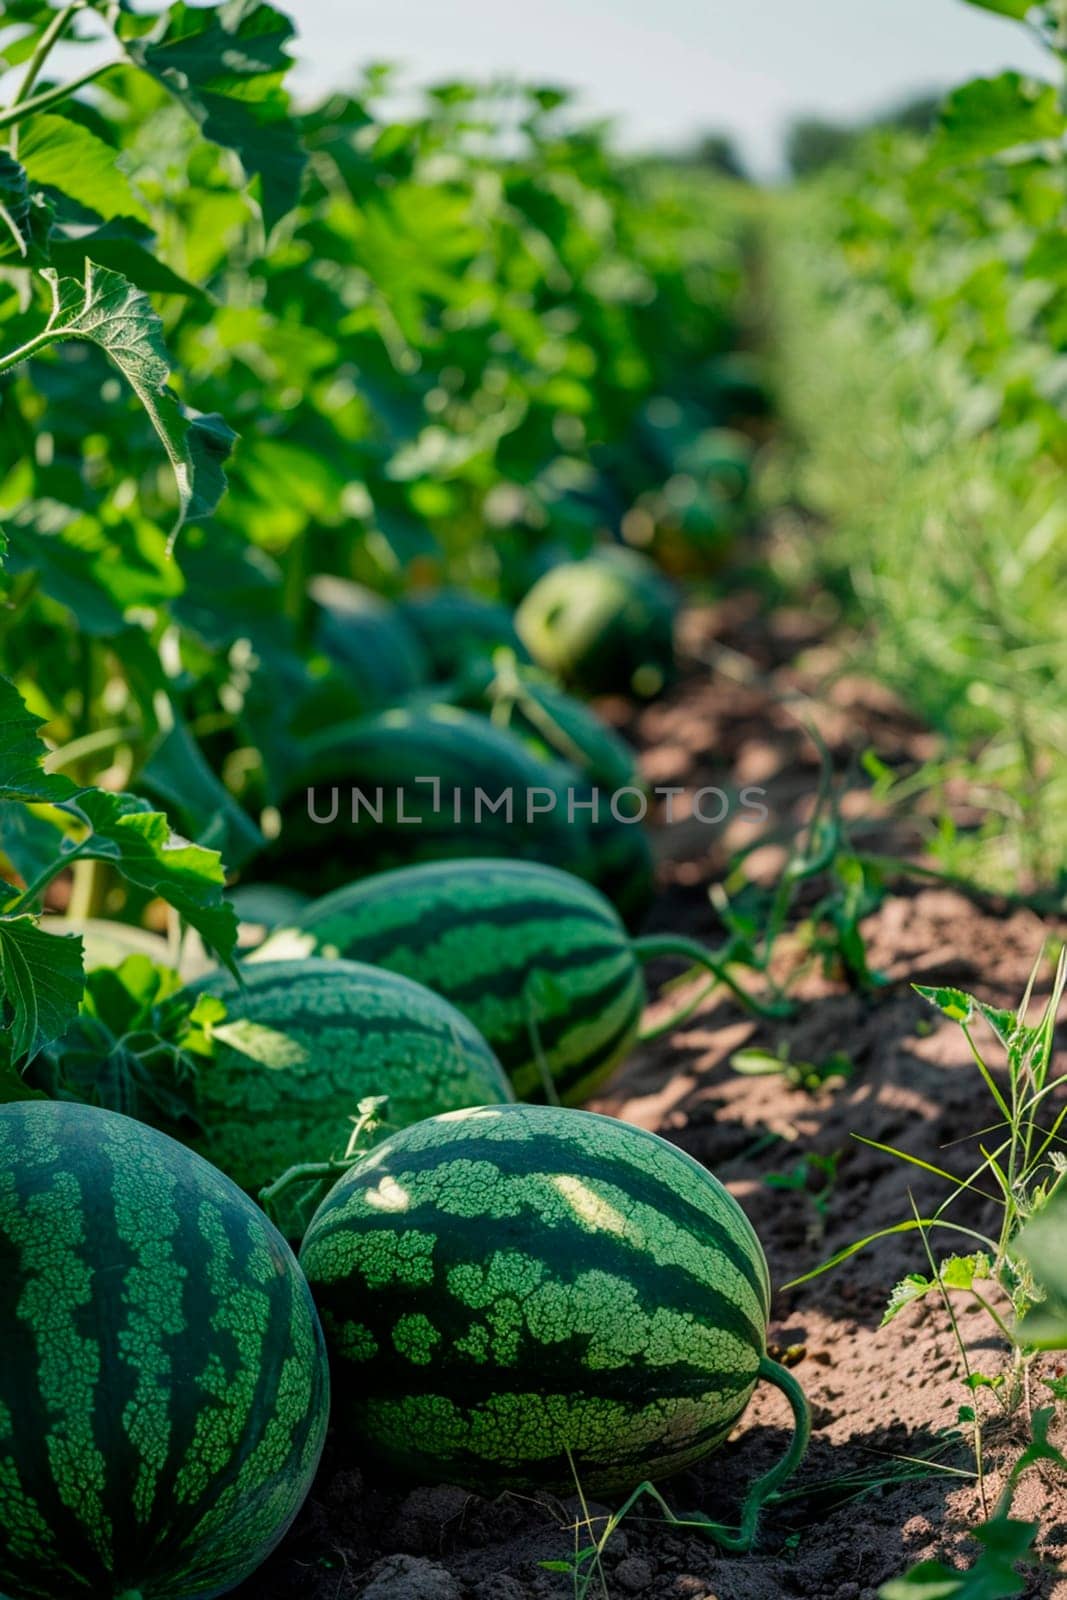 watermelon harvest on the plantation. Selective focus. food.